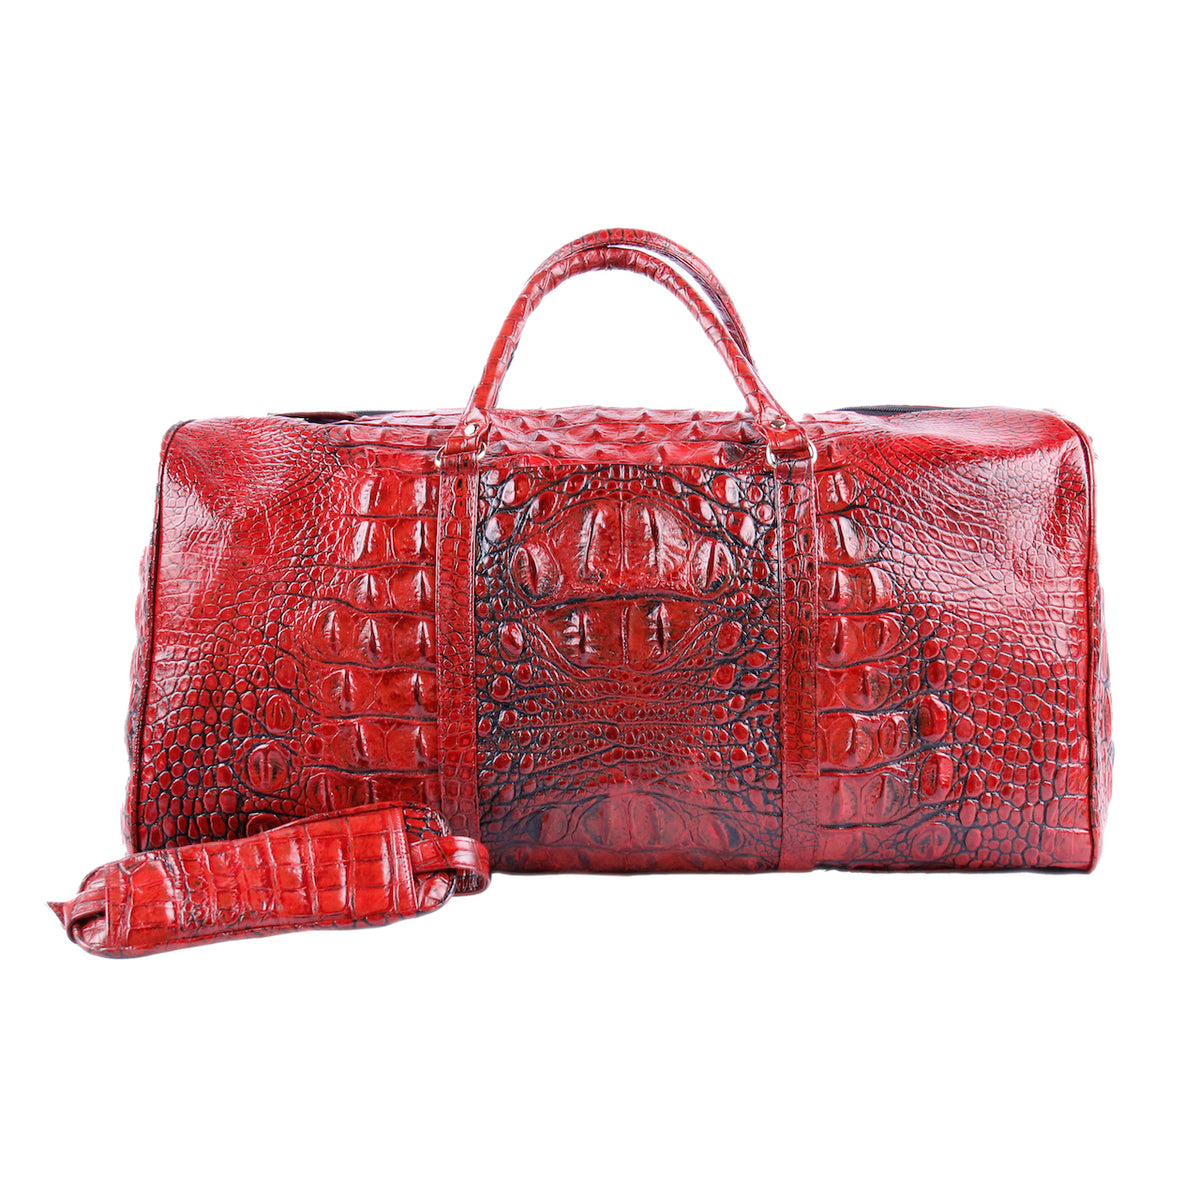 Voyage Bag in Stunning Red: Best Travel Partner | Voyage Carry On - VEARI